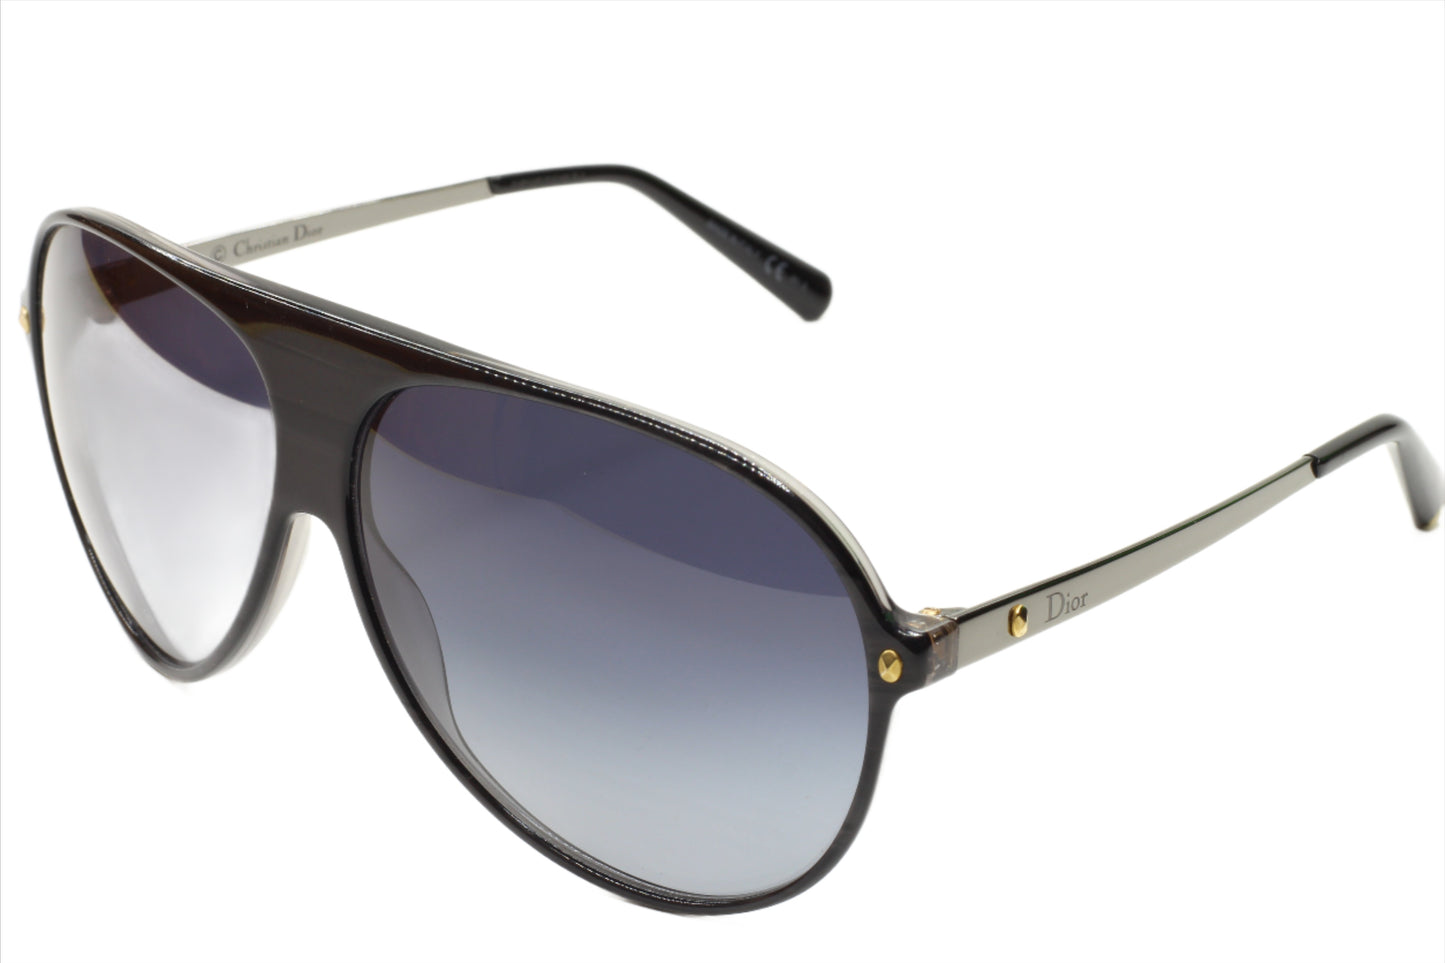 Christian Dior W5VHD Tahuata Les Marquises Aviator Sunglasses - sunglasses, Women